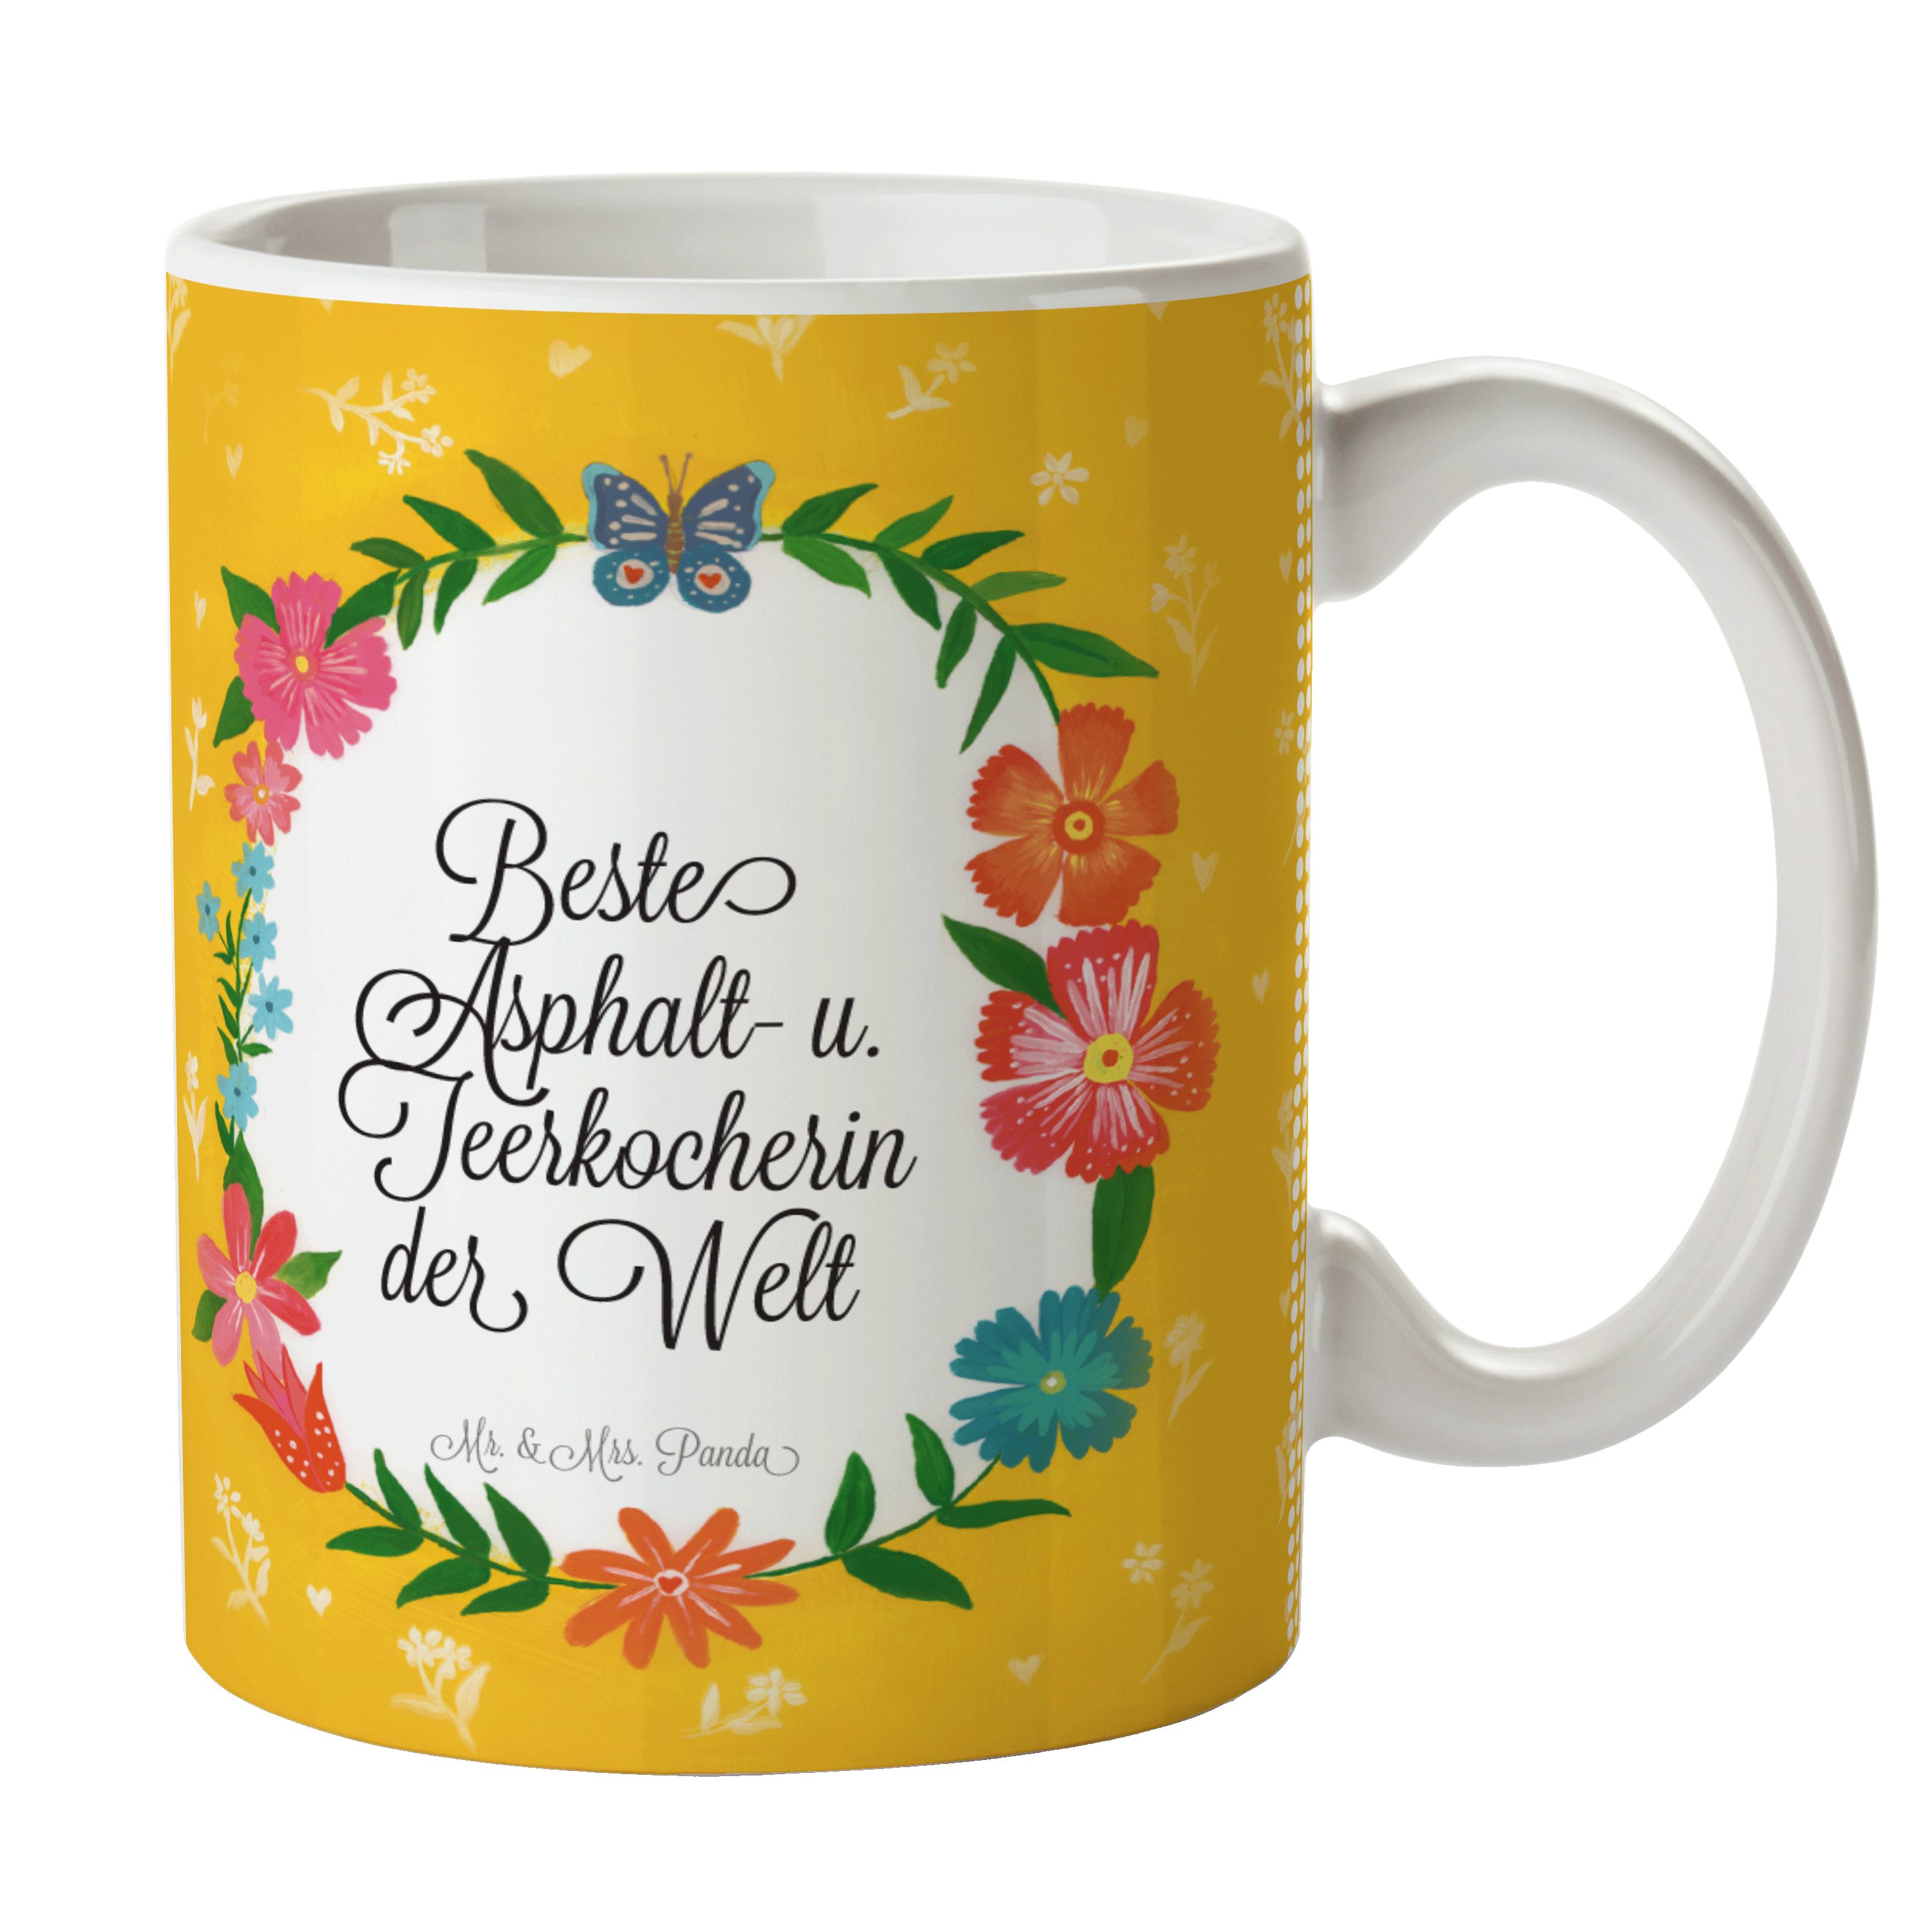 Keramik Asphalt- Mr. u. Ausbildung, Panda Teerkocherin Tasse Mrs. Kaffee, Geschenk, - & Keramiktasse,